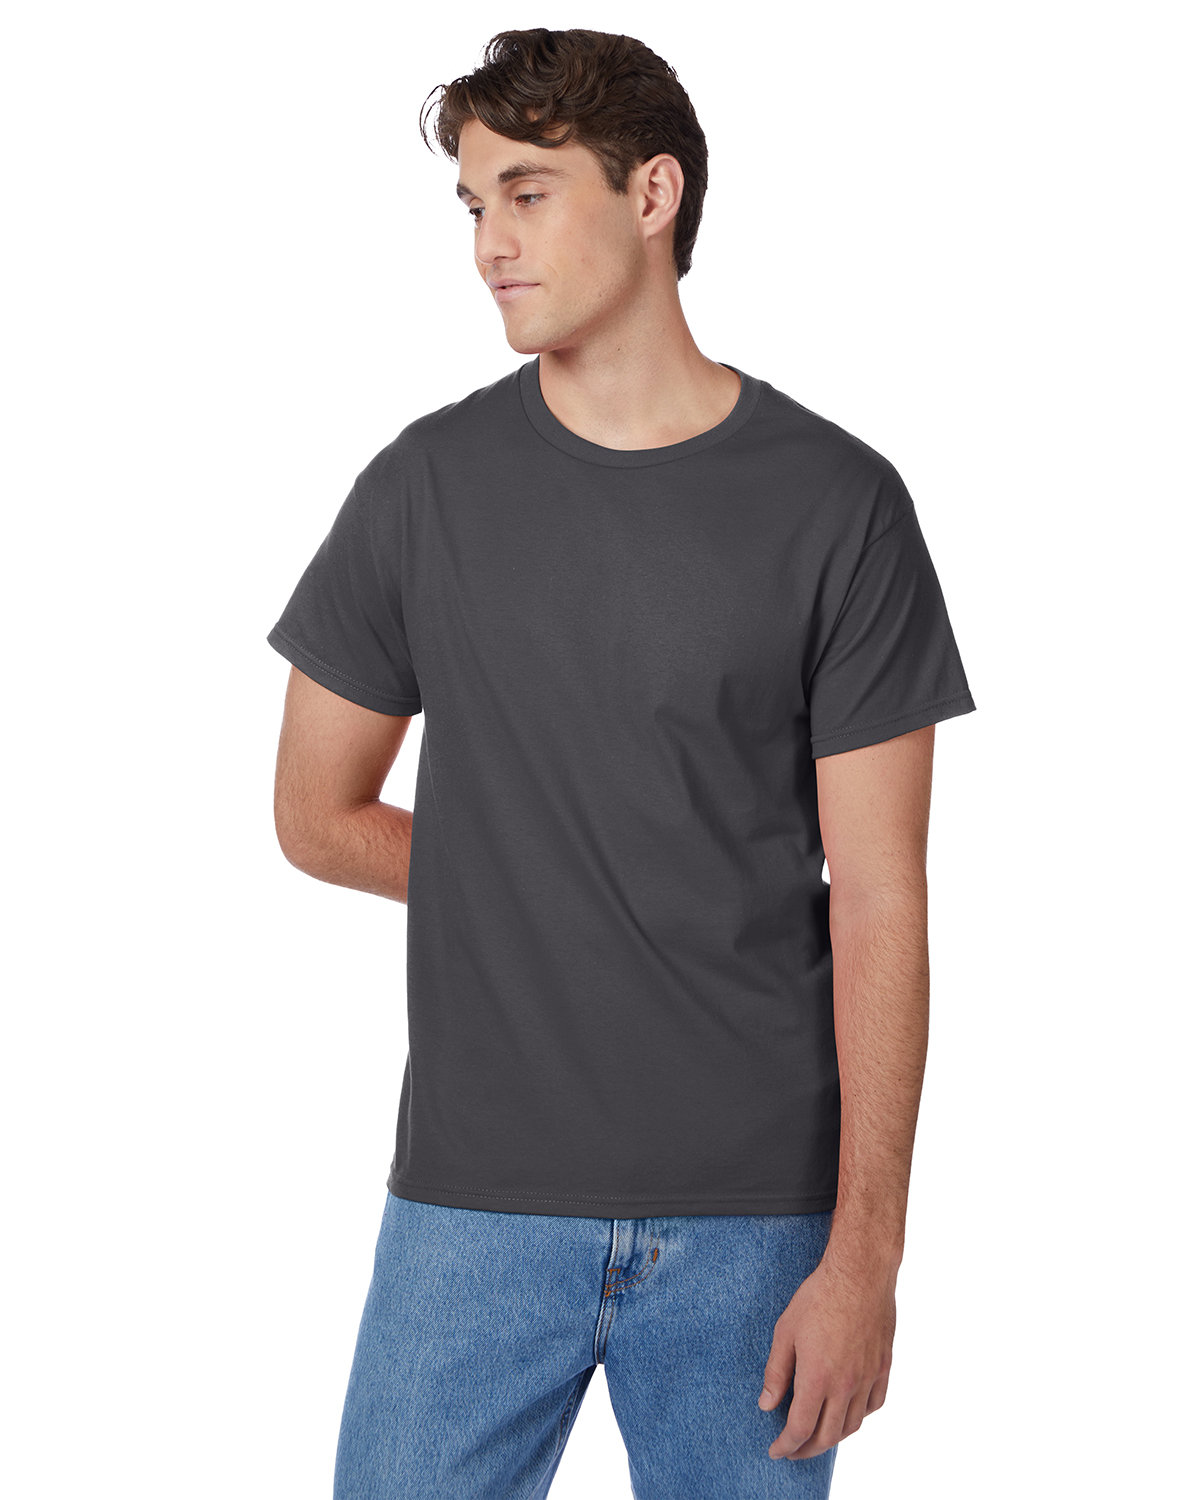 Hanes Men's Authentic-T T-Shirt SMOKE GRAY 